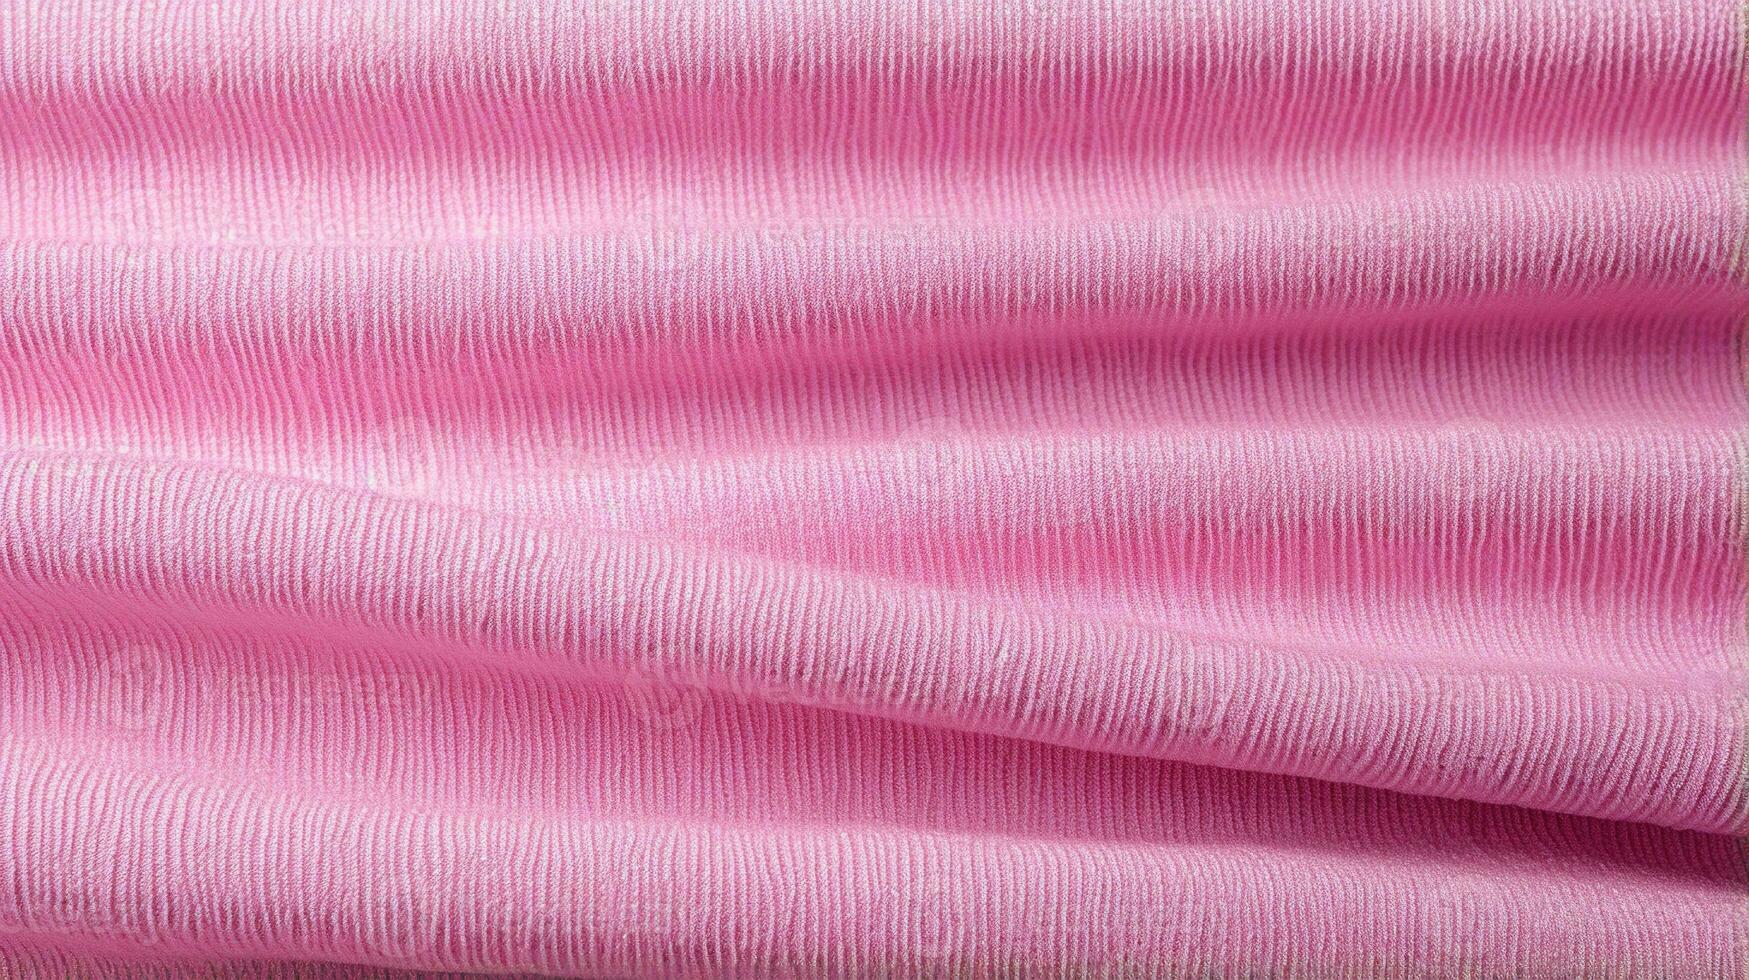 generatief ai, gebreid roze trui structuur detailopname, magenta of licht roze abstract achtergrond foto